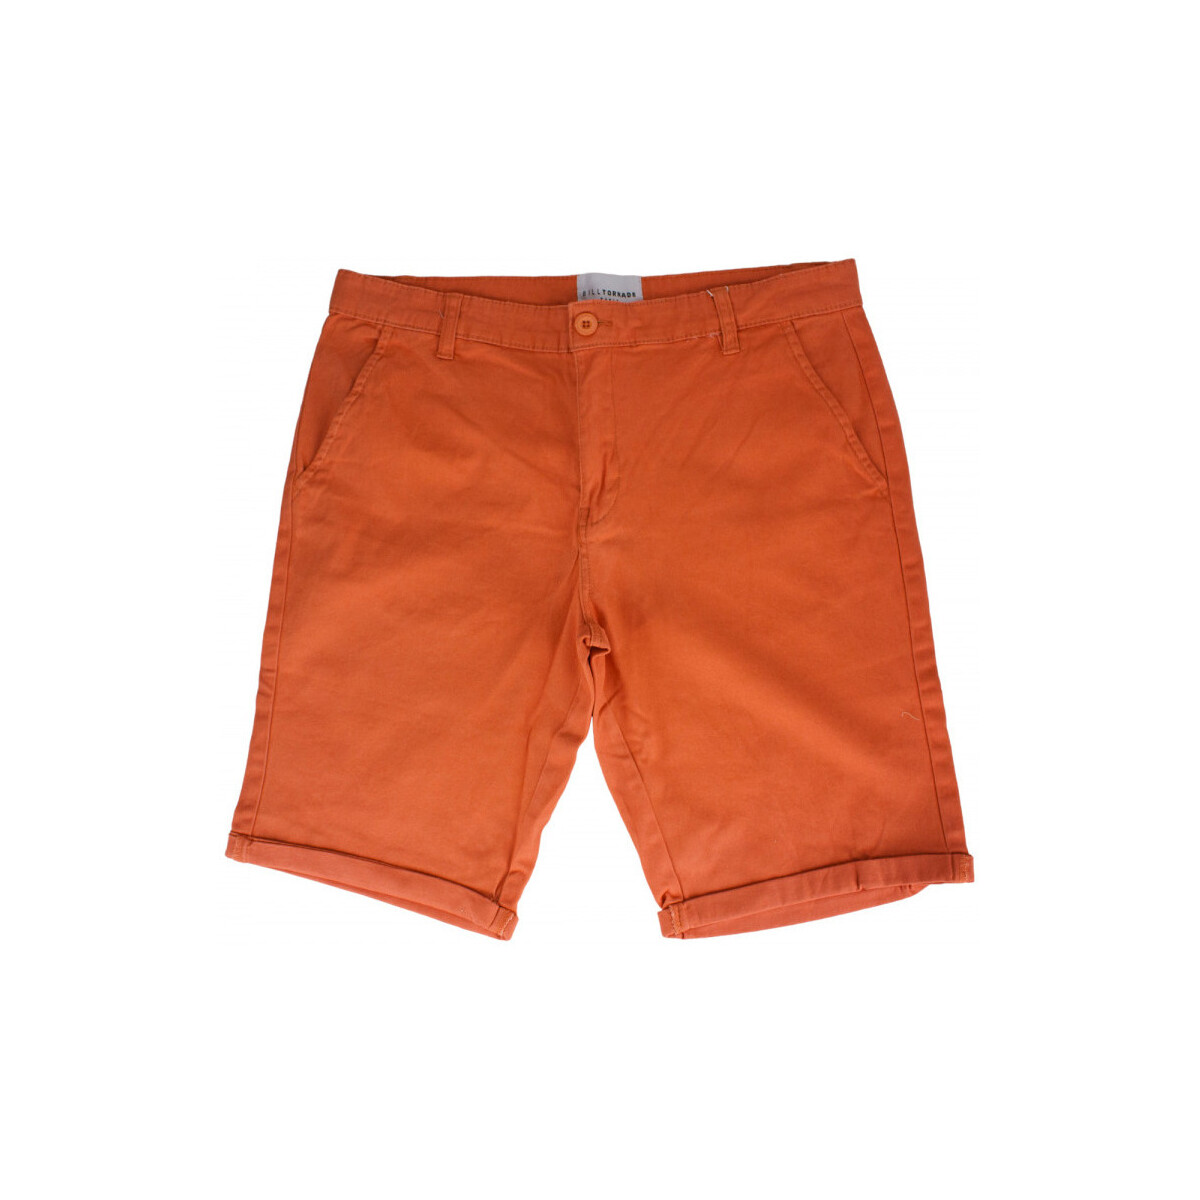 Vêtements Homme sporty Shorts / Bermudas Billtornade Revers Orange